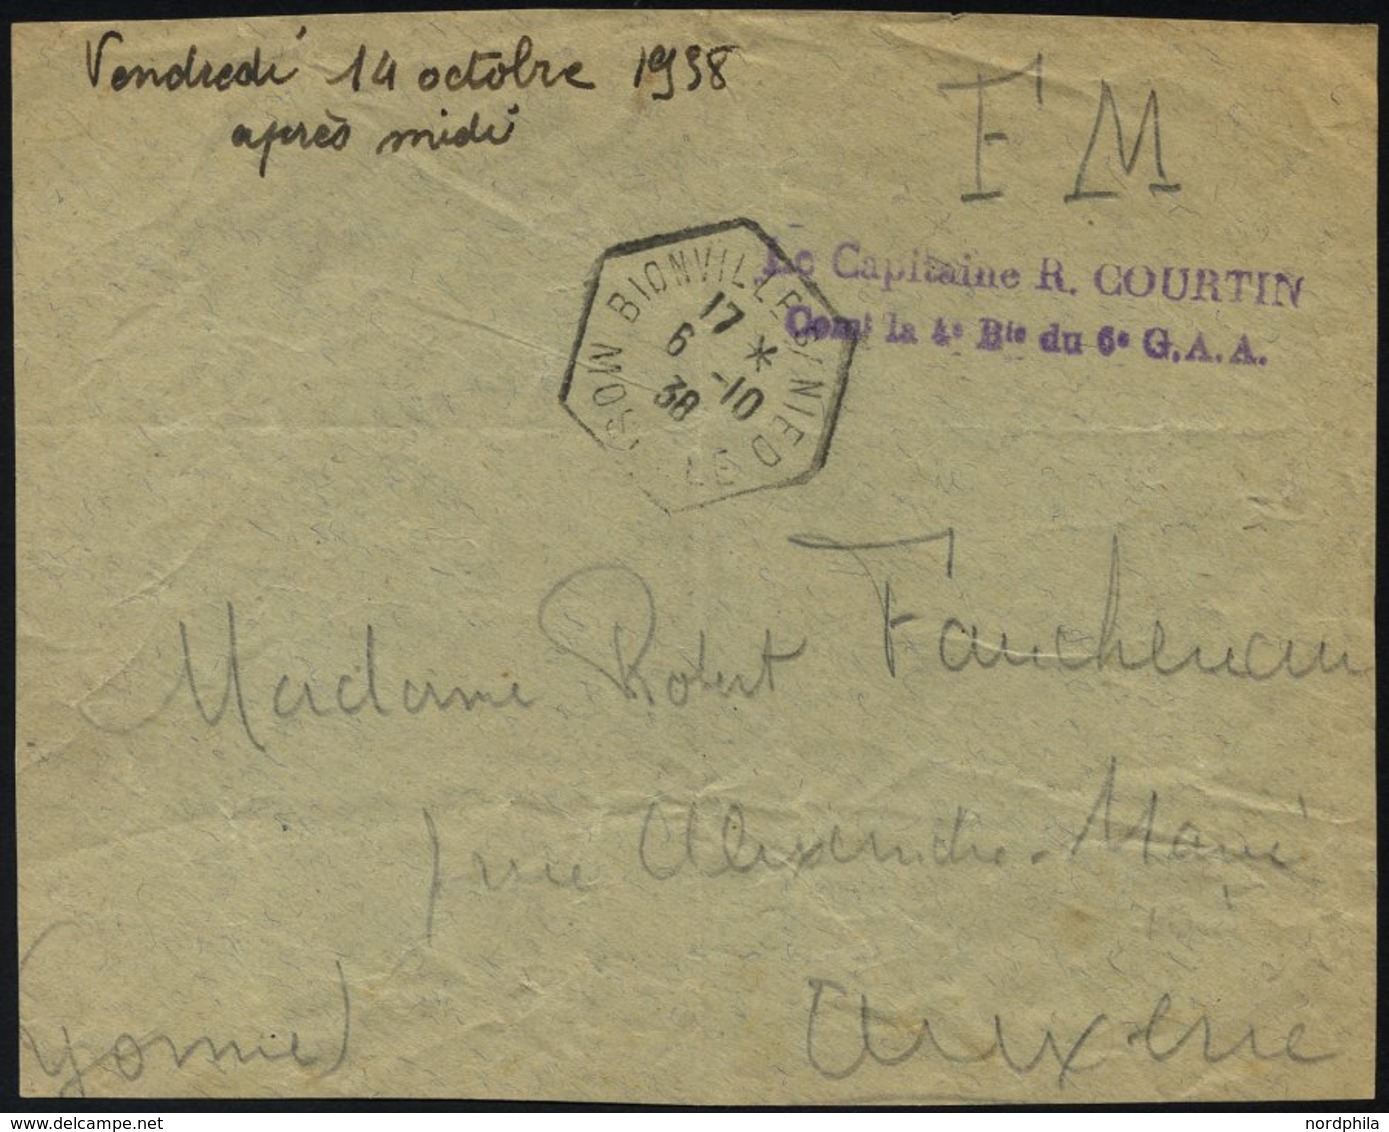 FRANKREICH FELDPOST 1938, Violetter Absenderstempel Le Capitaine R. Courtin, Con La 4 D Du 6 G.A.A. Auf Briefvorderseite - Guerre (timbres De)